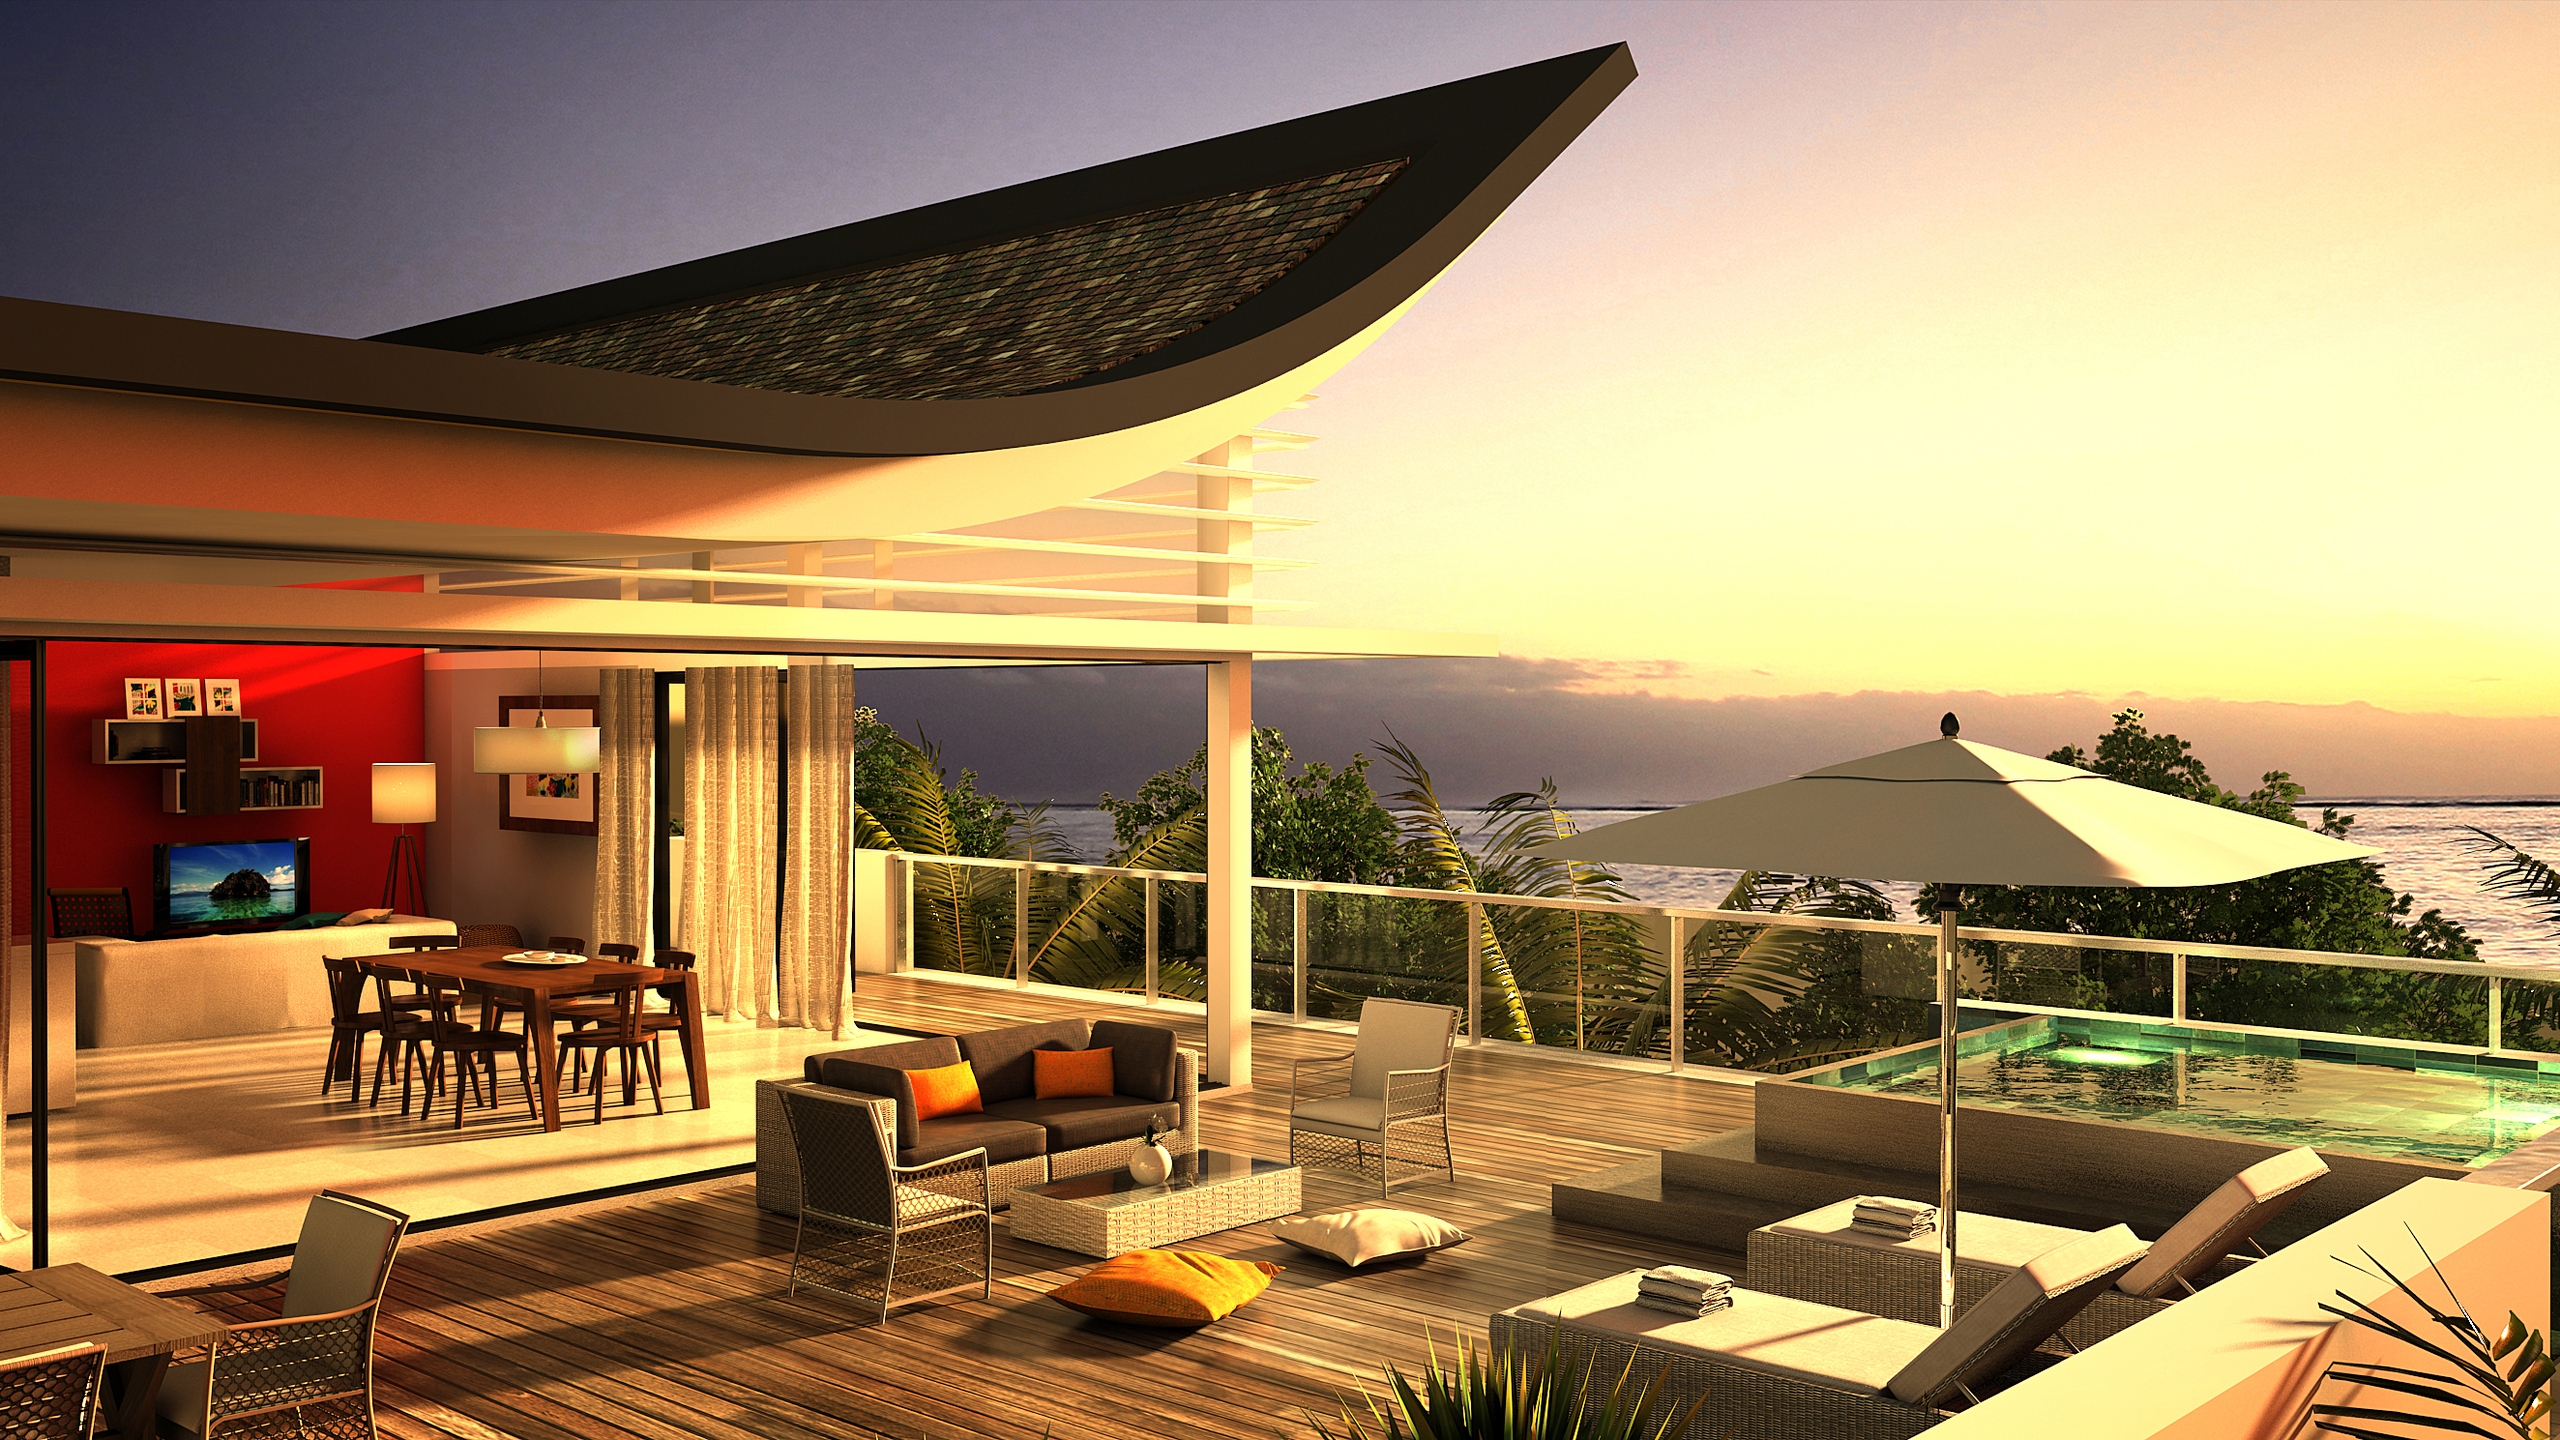 Luxury Villa Terrace View for 2560x1440 HDTV resolution